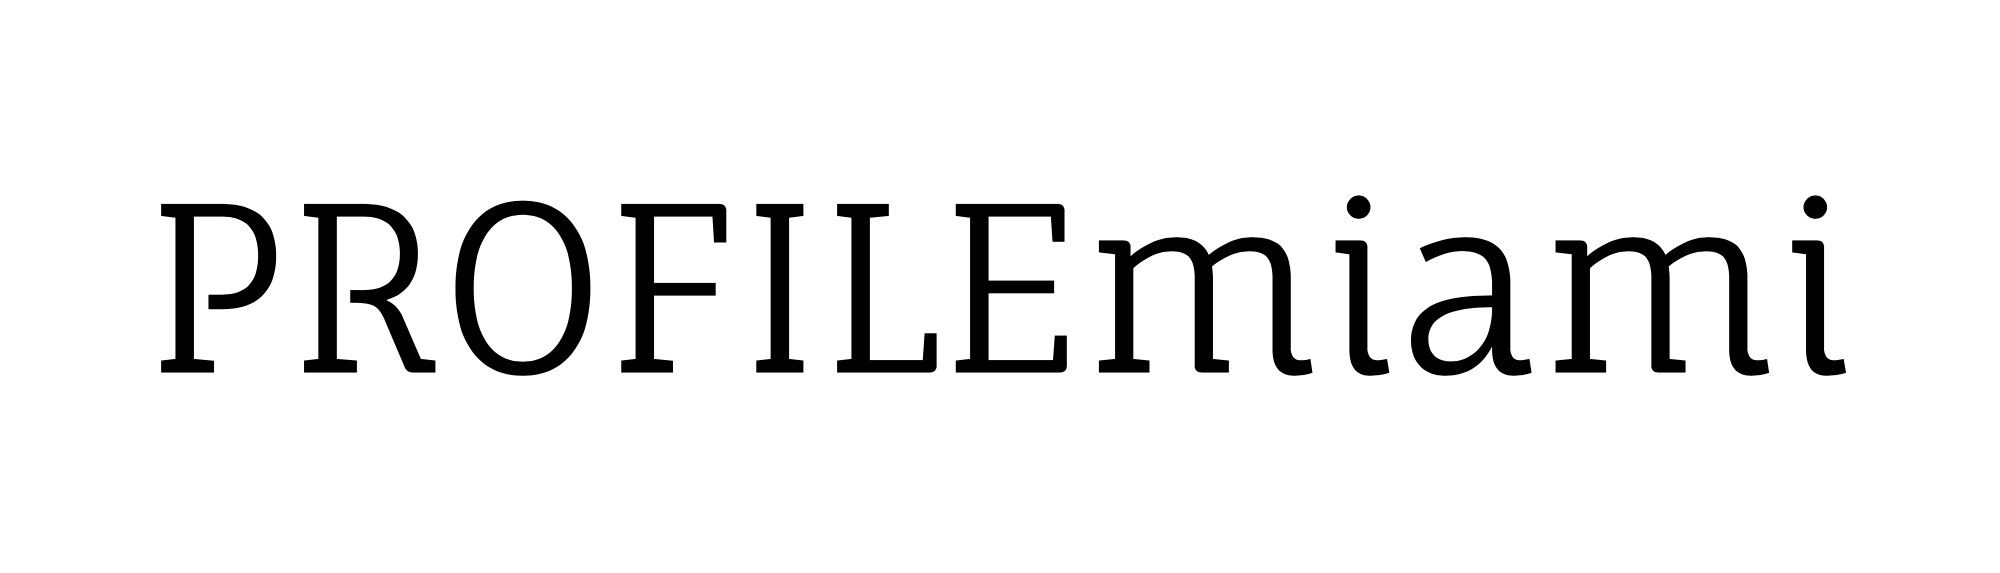 PROFILEmiami-logo-4 No subtext.png